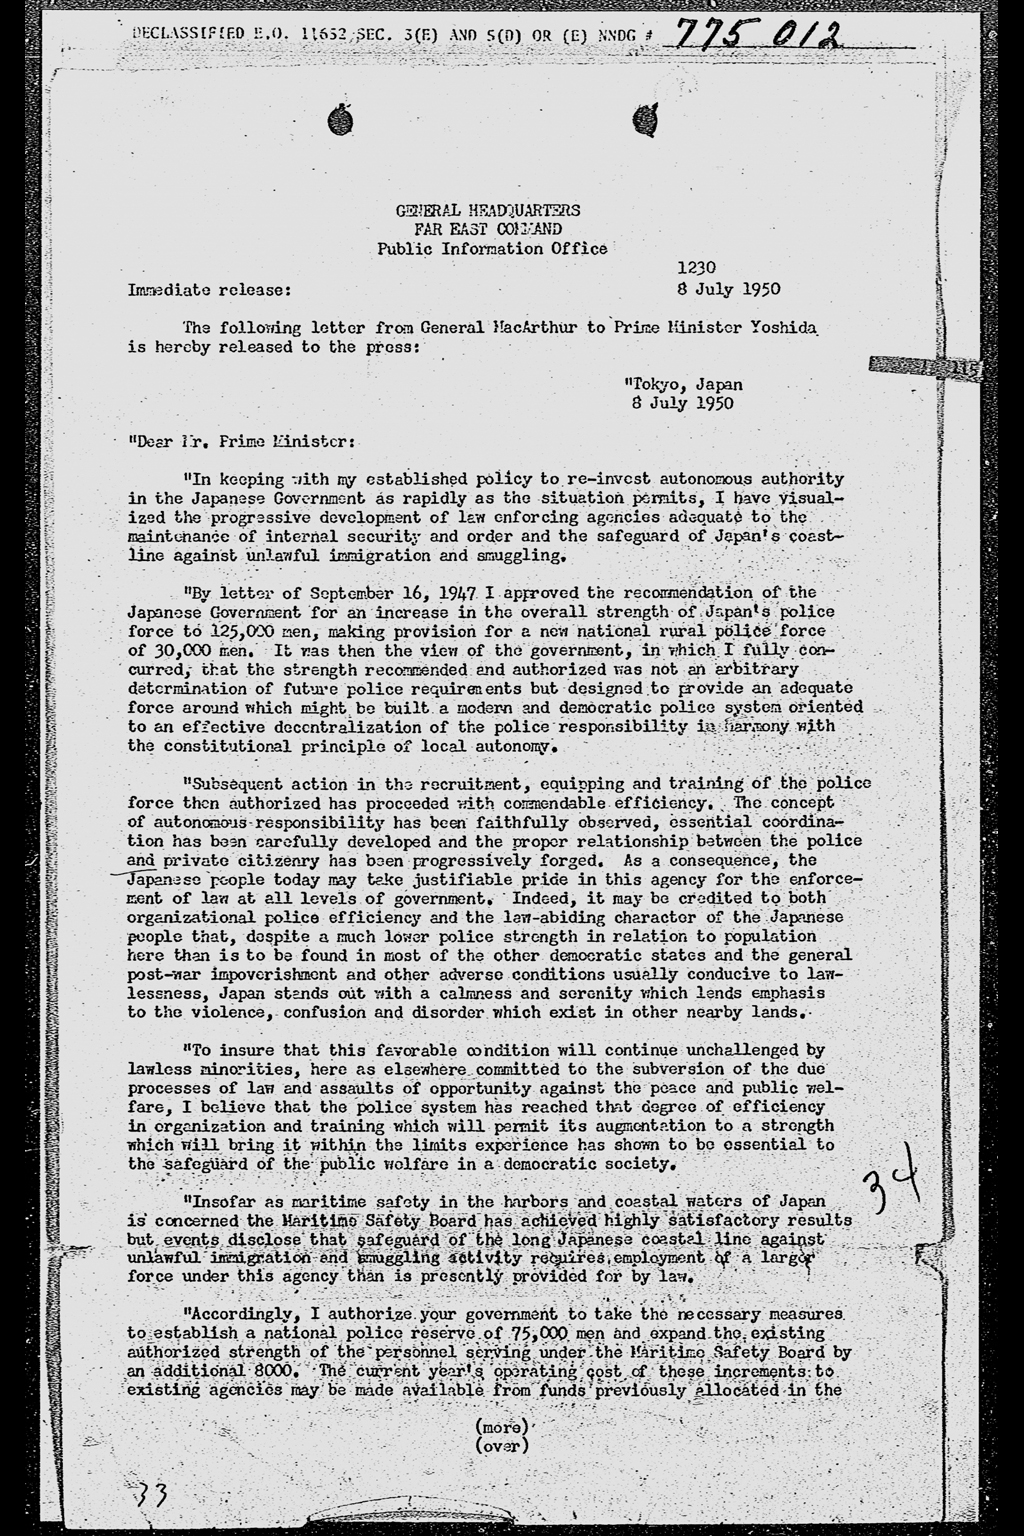 [Douglas MacArthur's Letter to Prime Minister](larger)